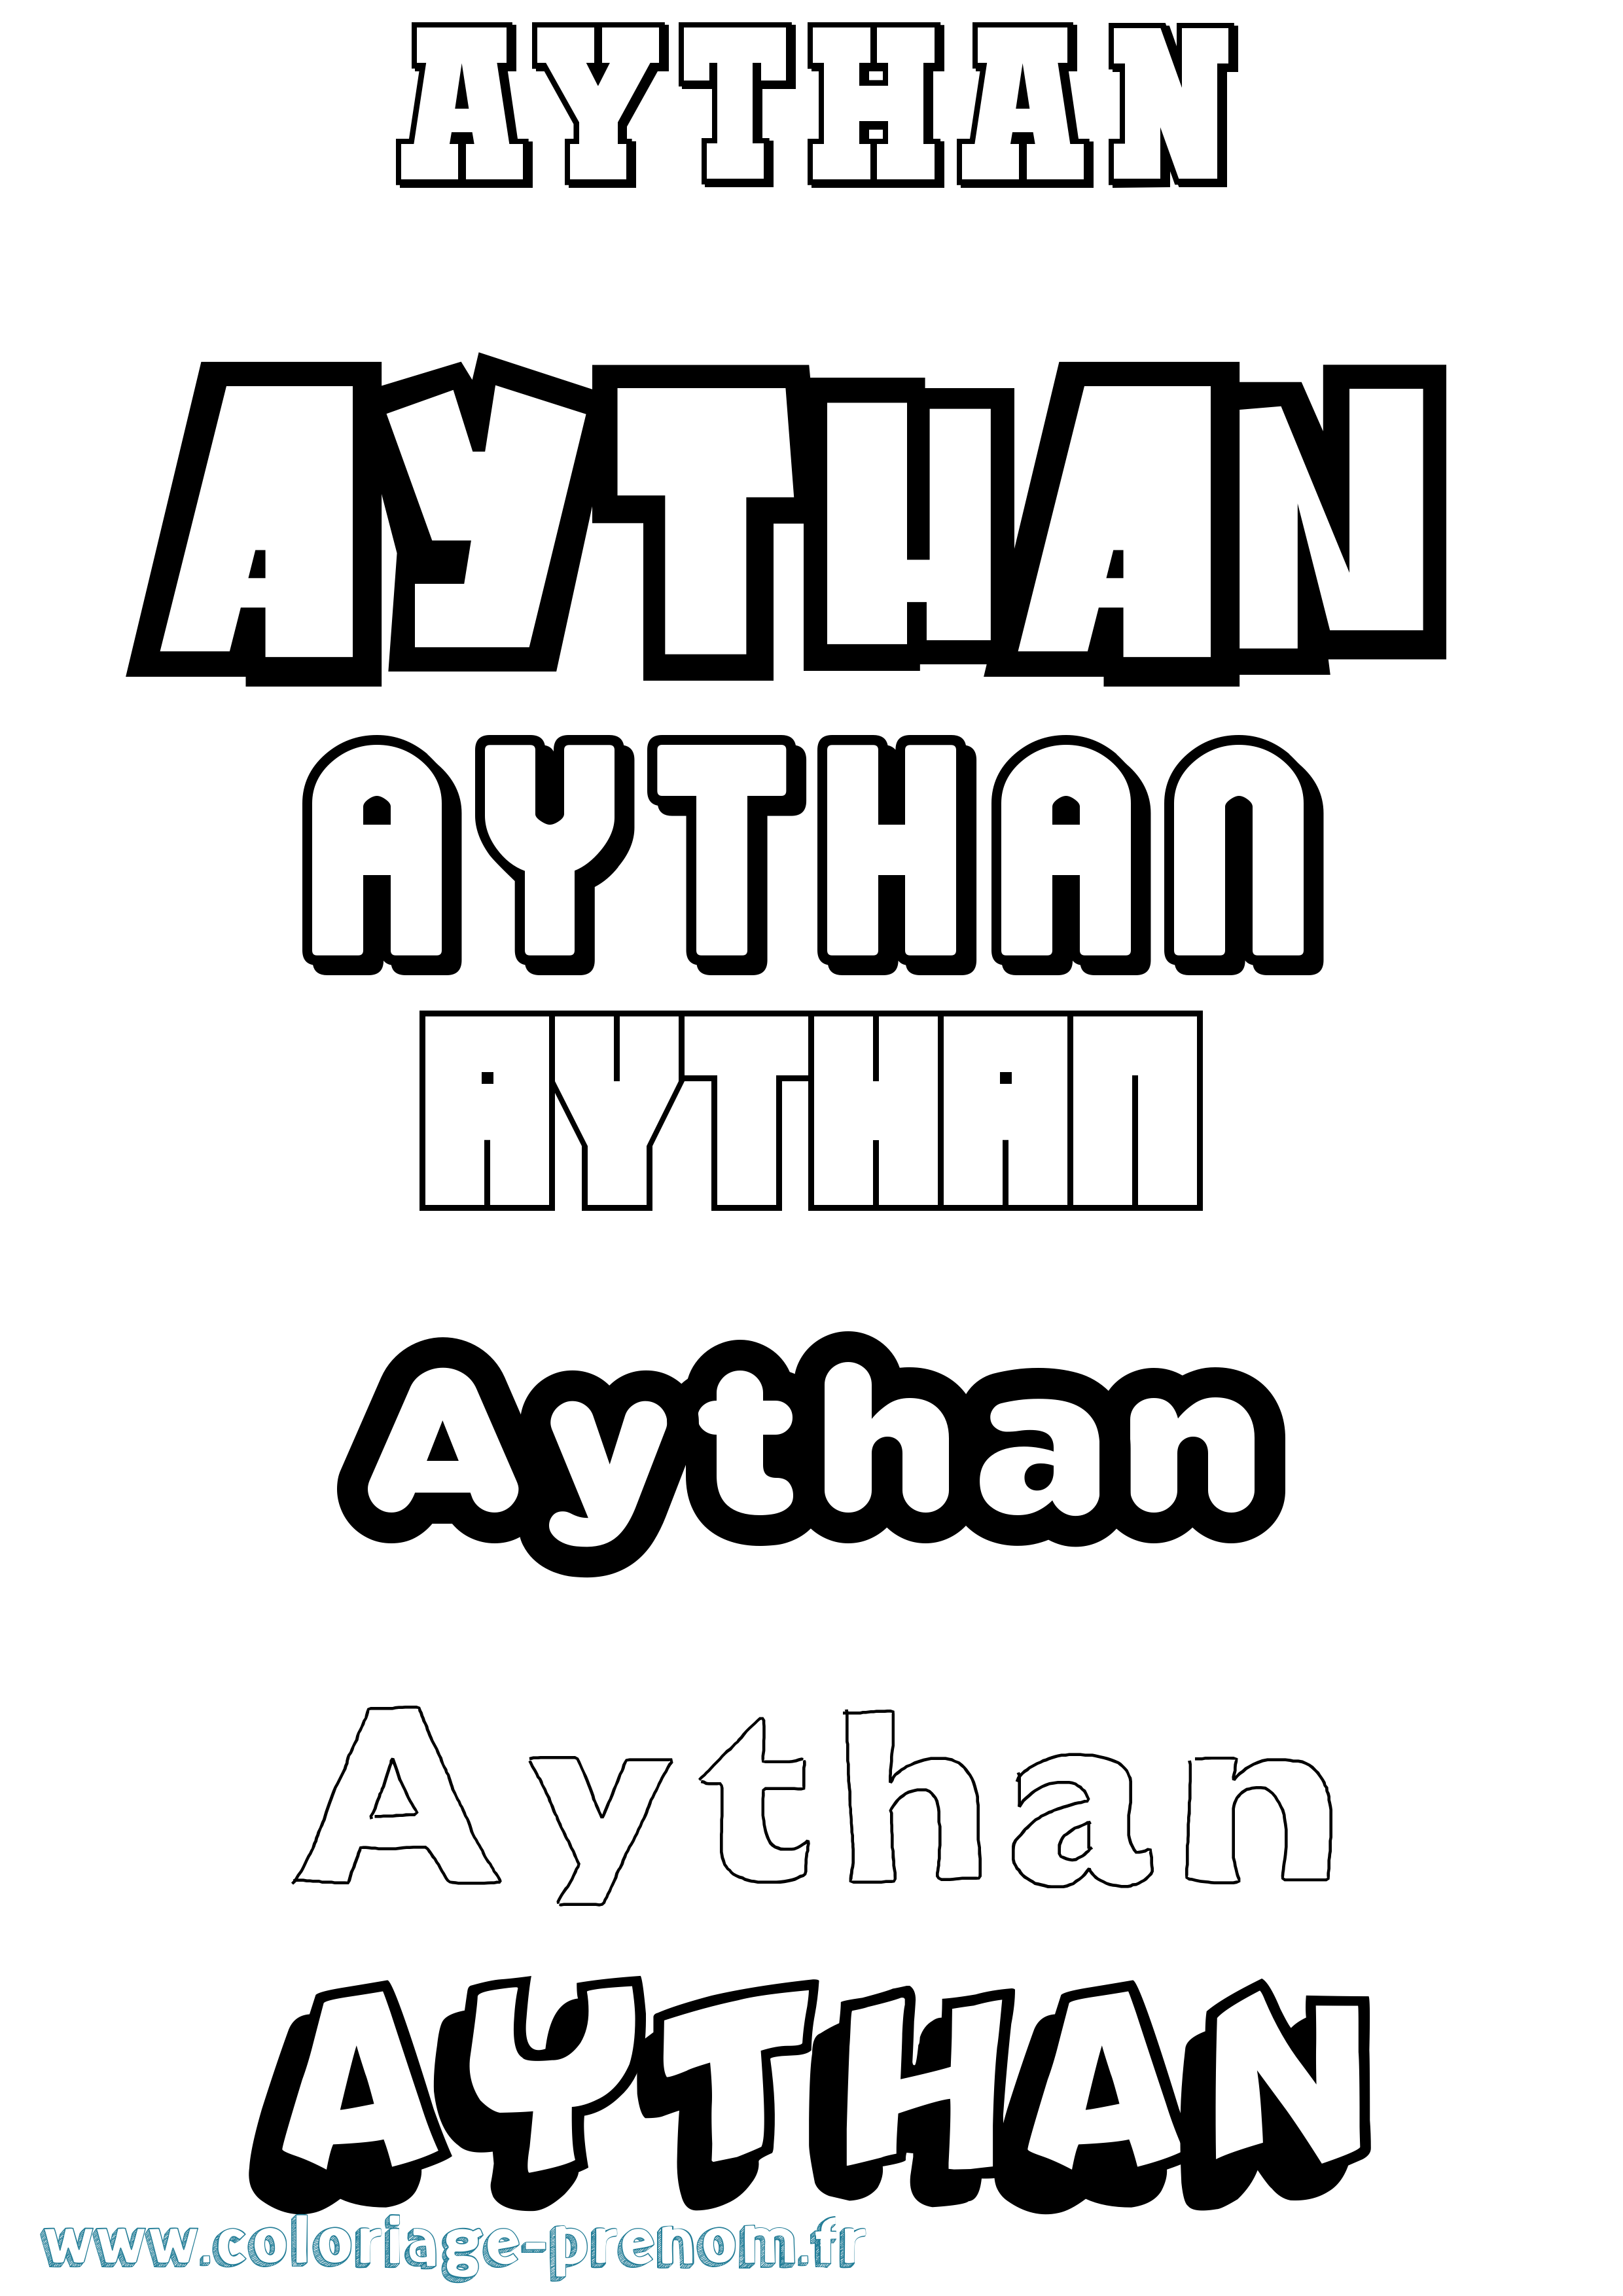 Coloriage prénom Aythan Simple